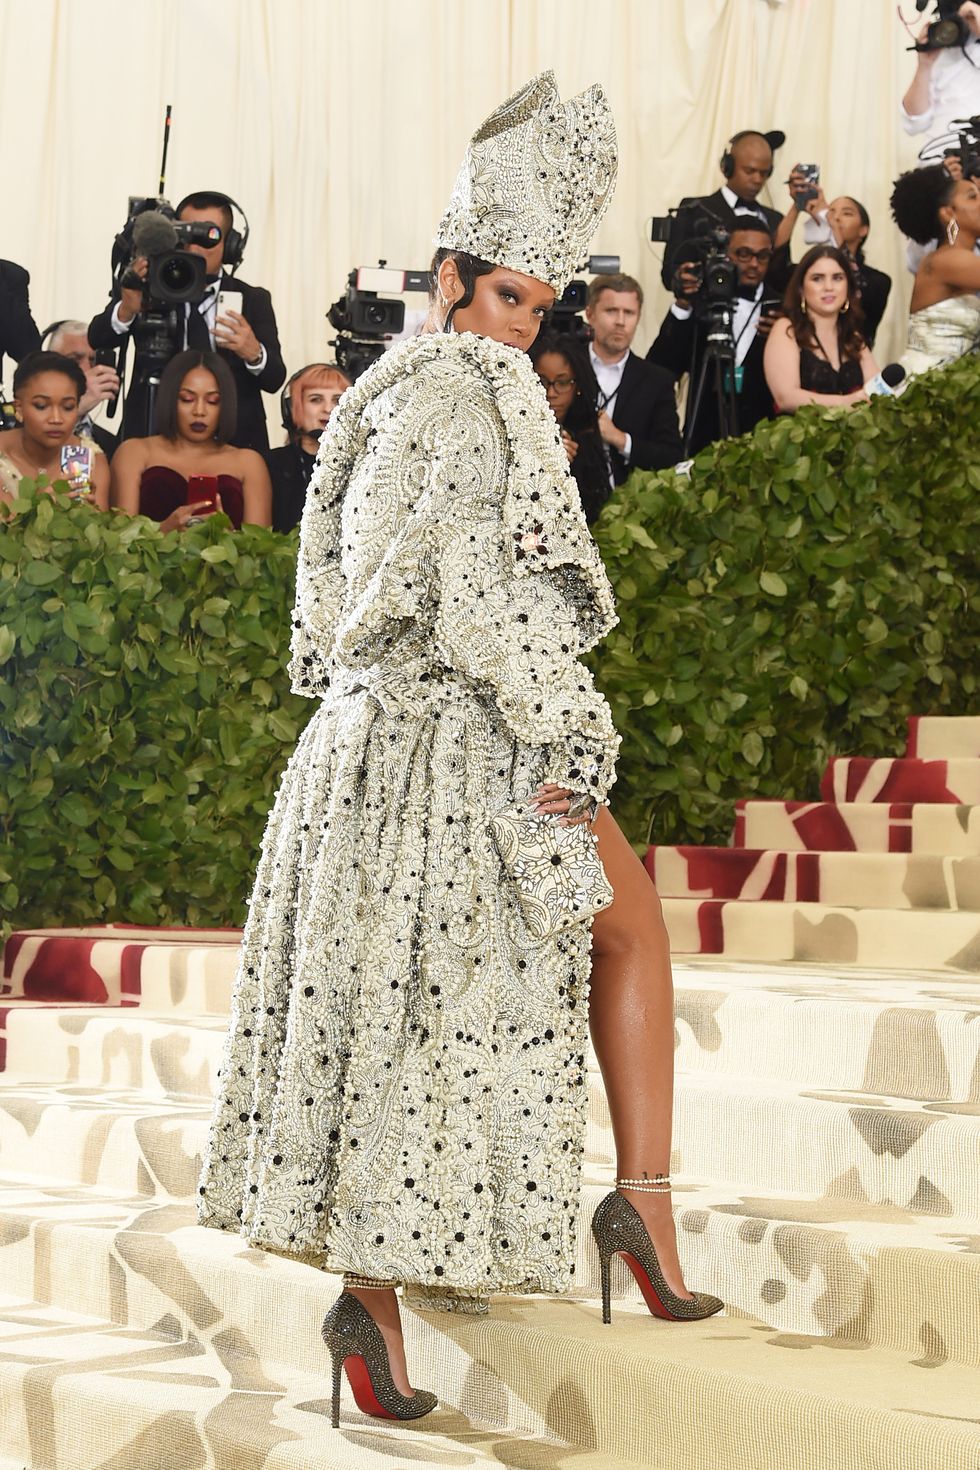 Met Gala Gown - Rihanna Dressed As A Pope Gala